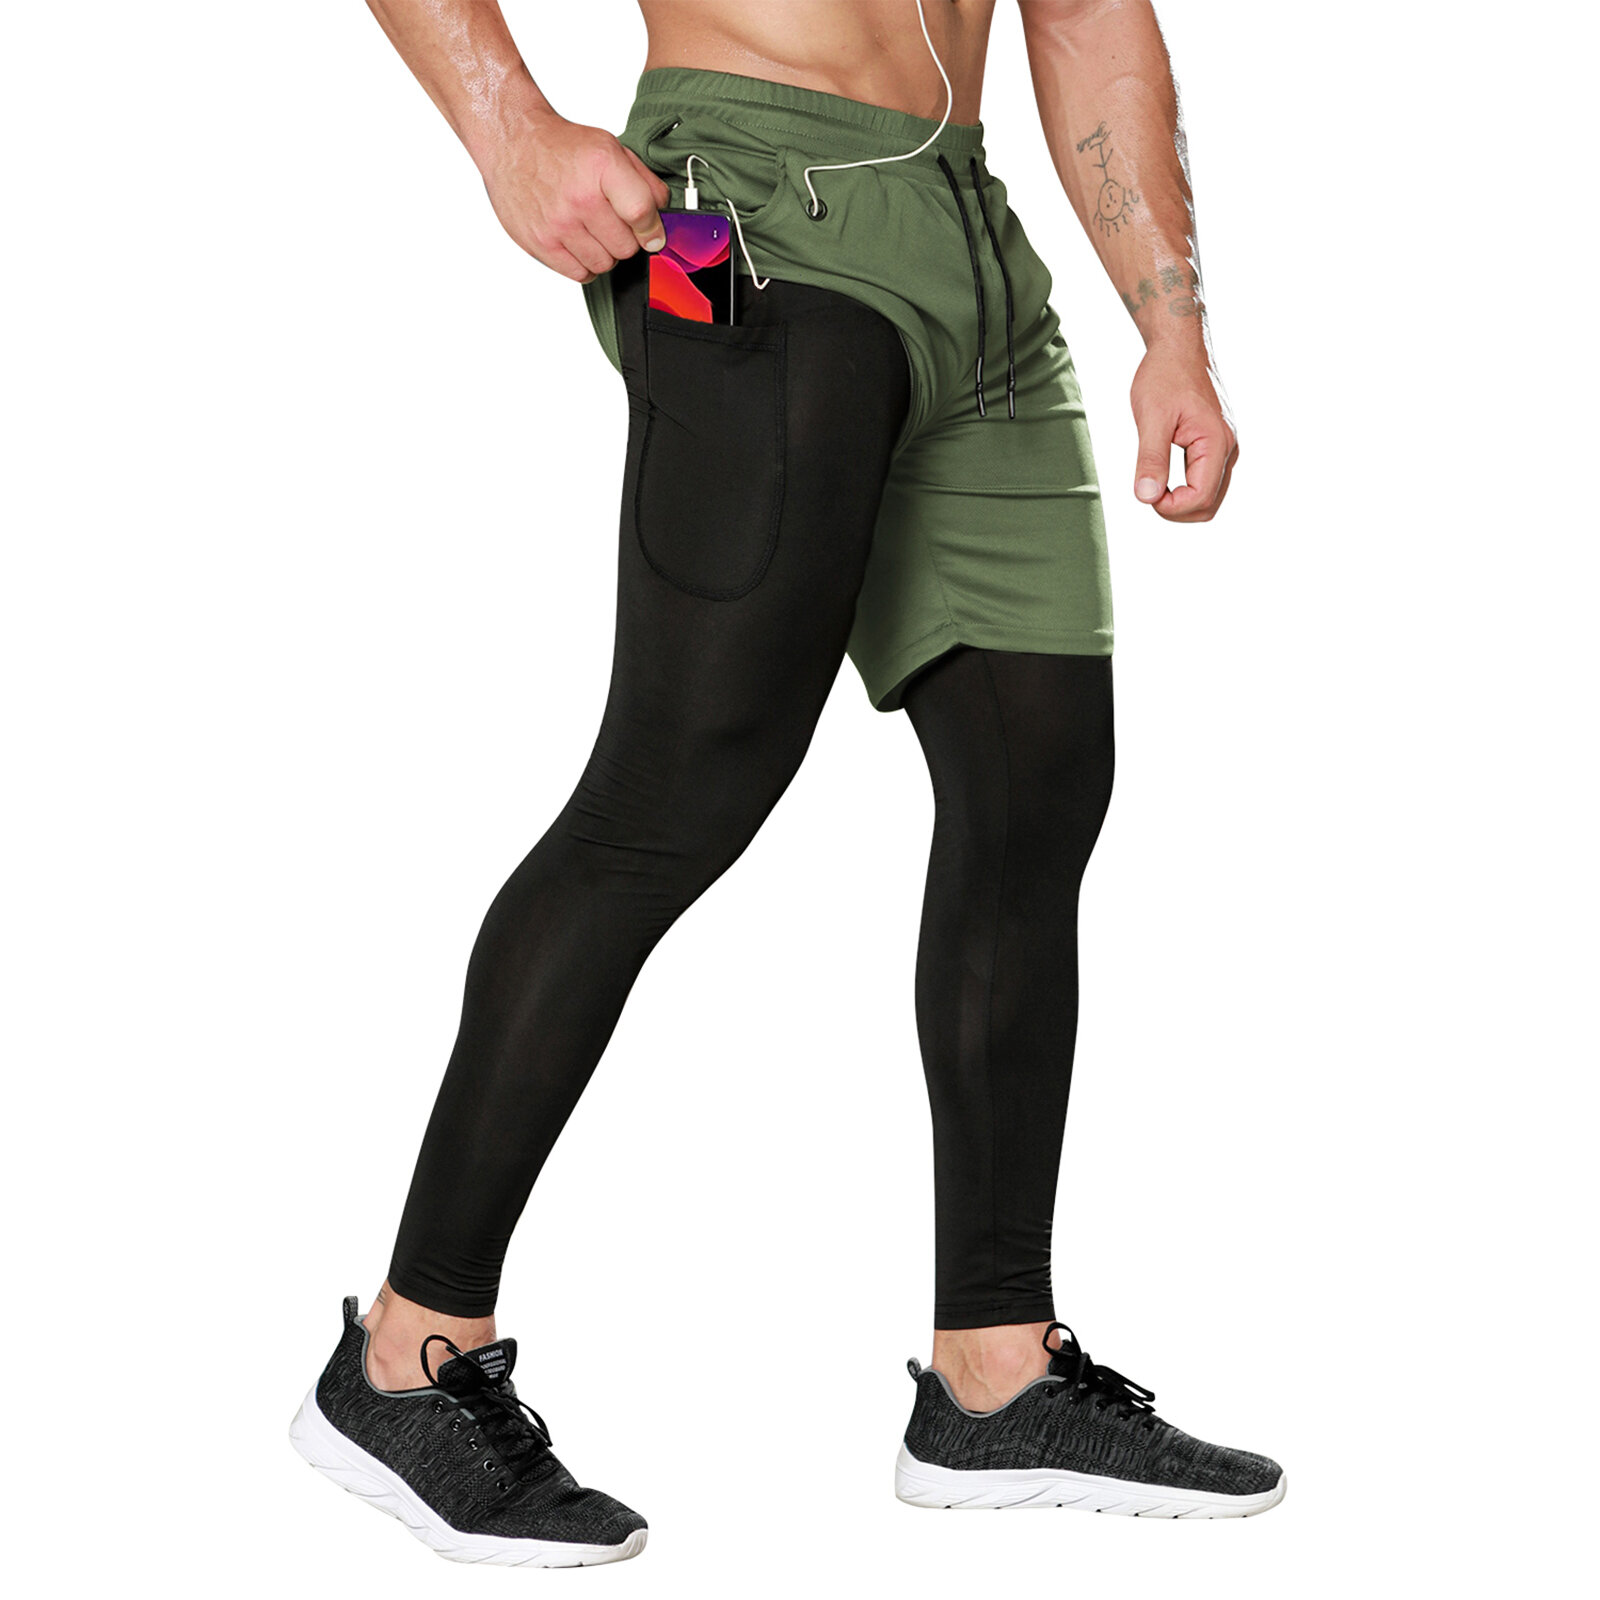 yoga leggings with shorts mens - Buy yoga leggings with shorts